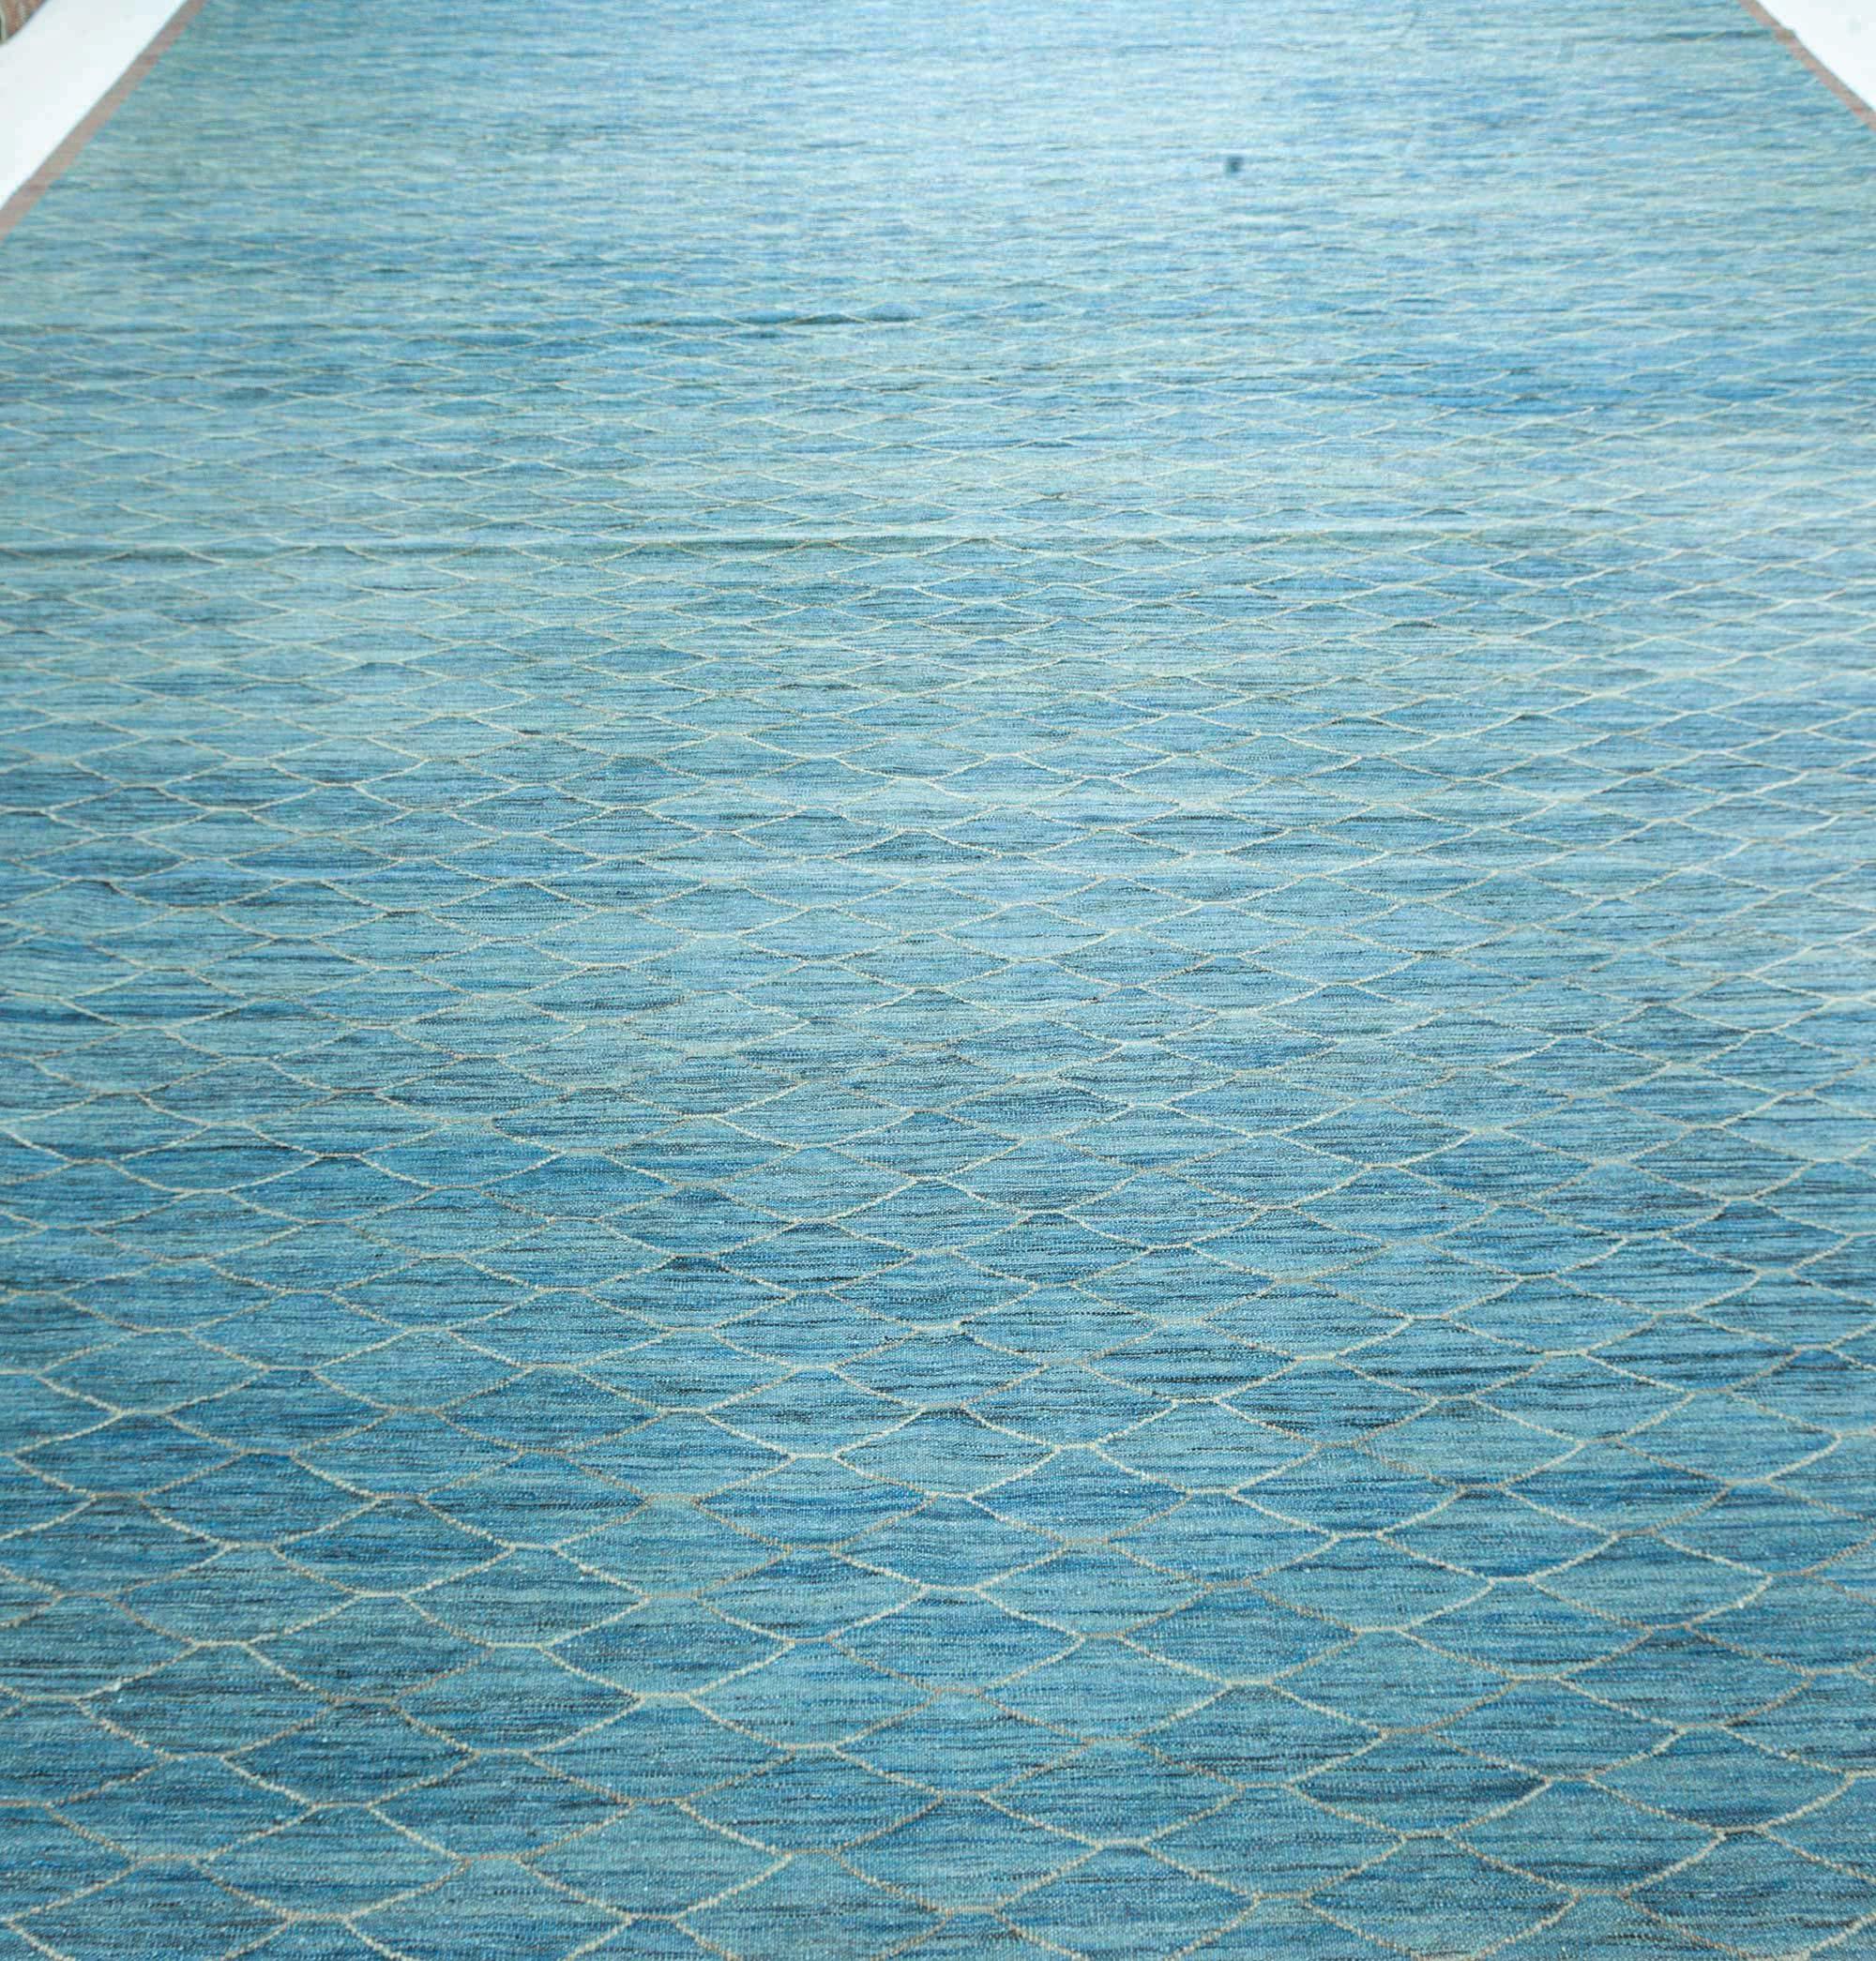 Contemporary large Kilim blue rug by Doris Leslie Blau
Size: 15'1